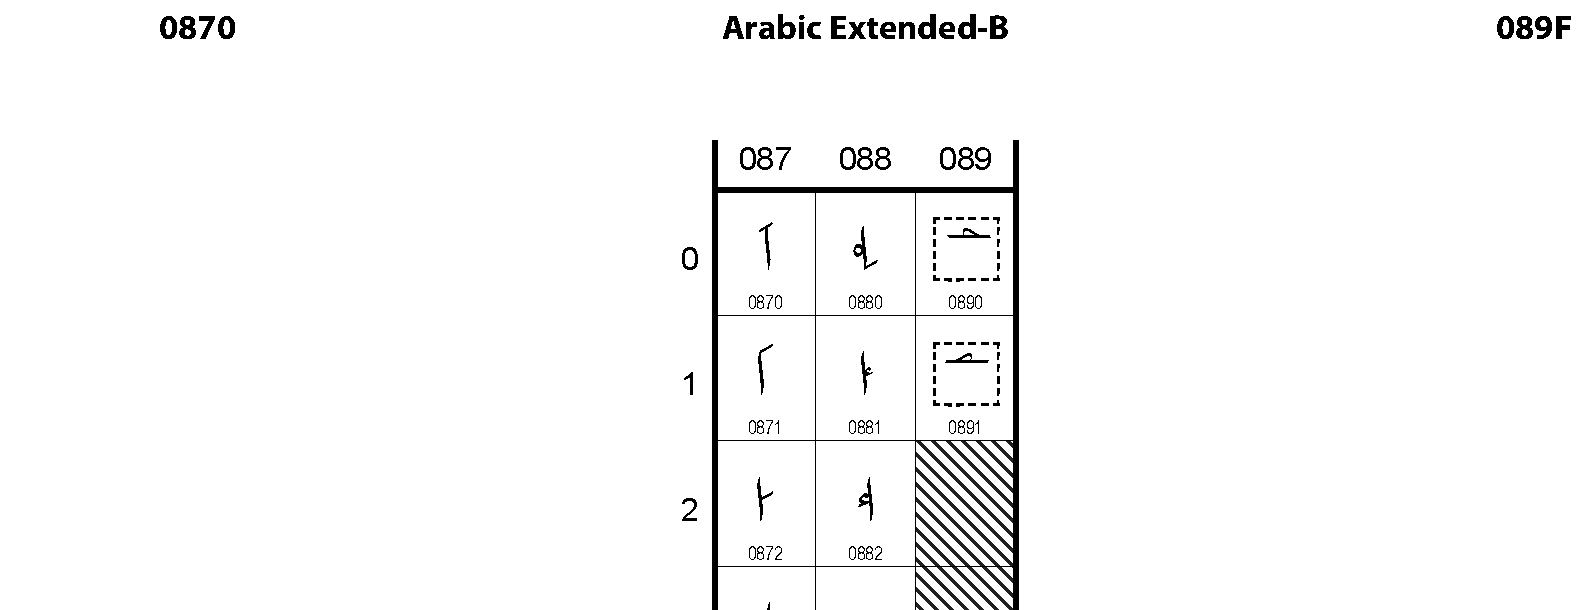 Unicode - Arabic Extended-B